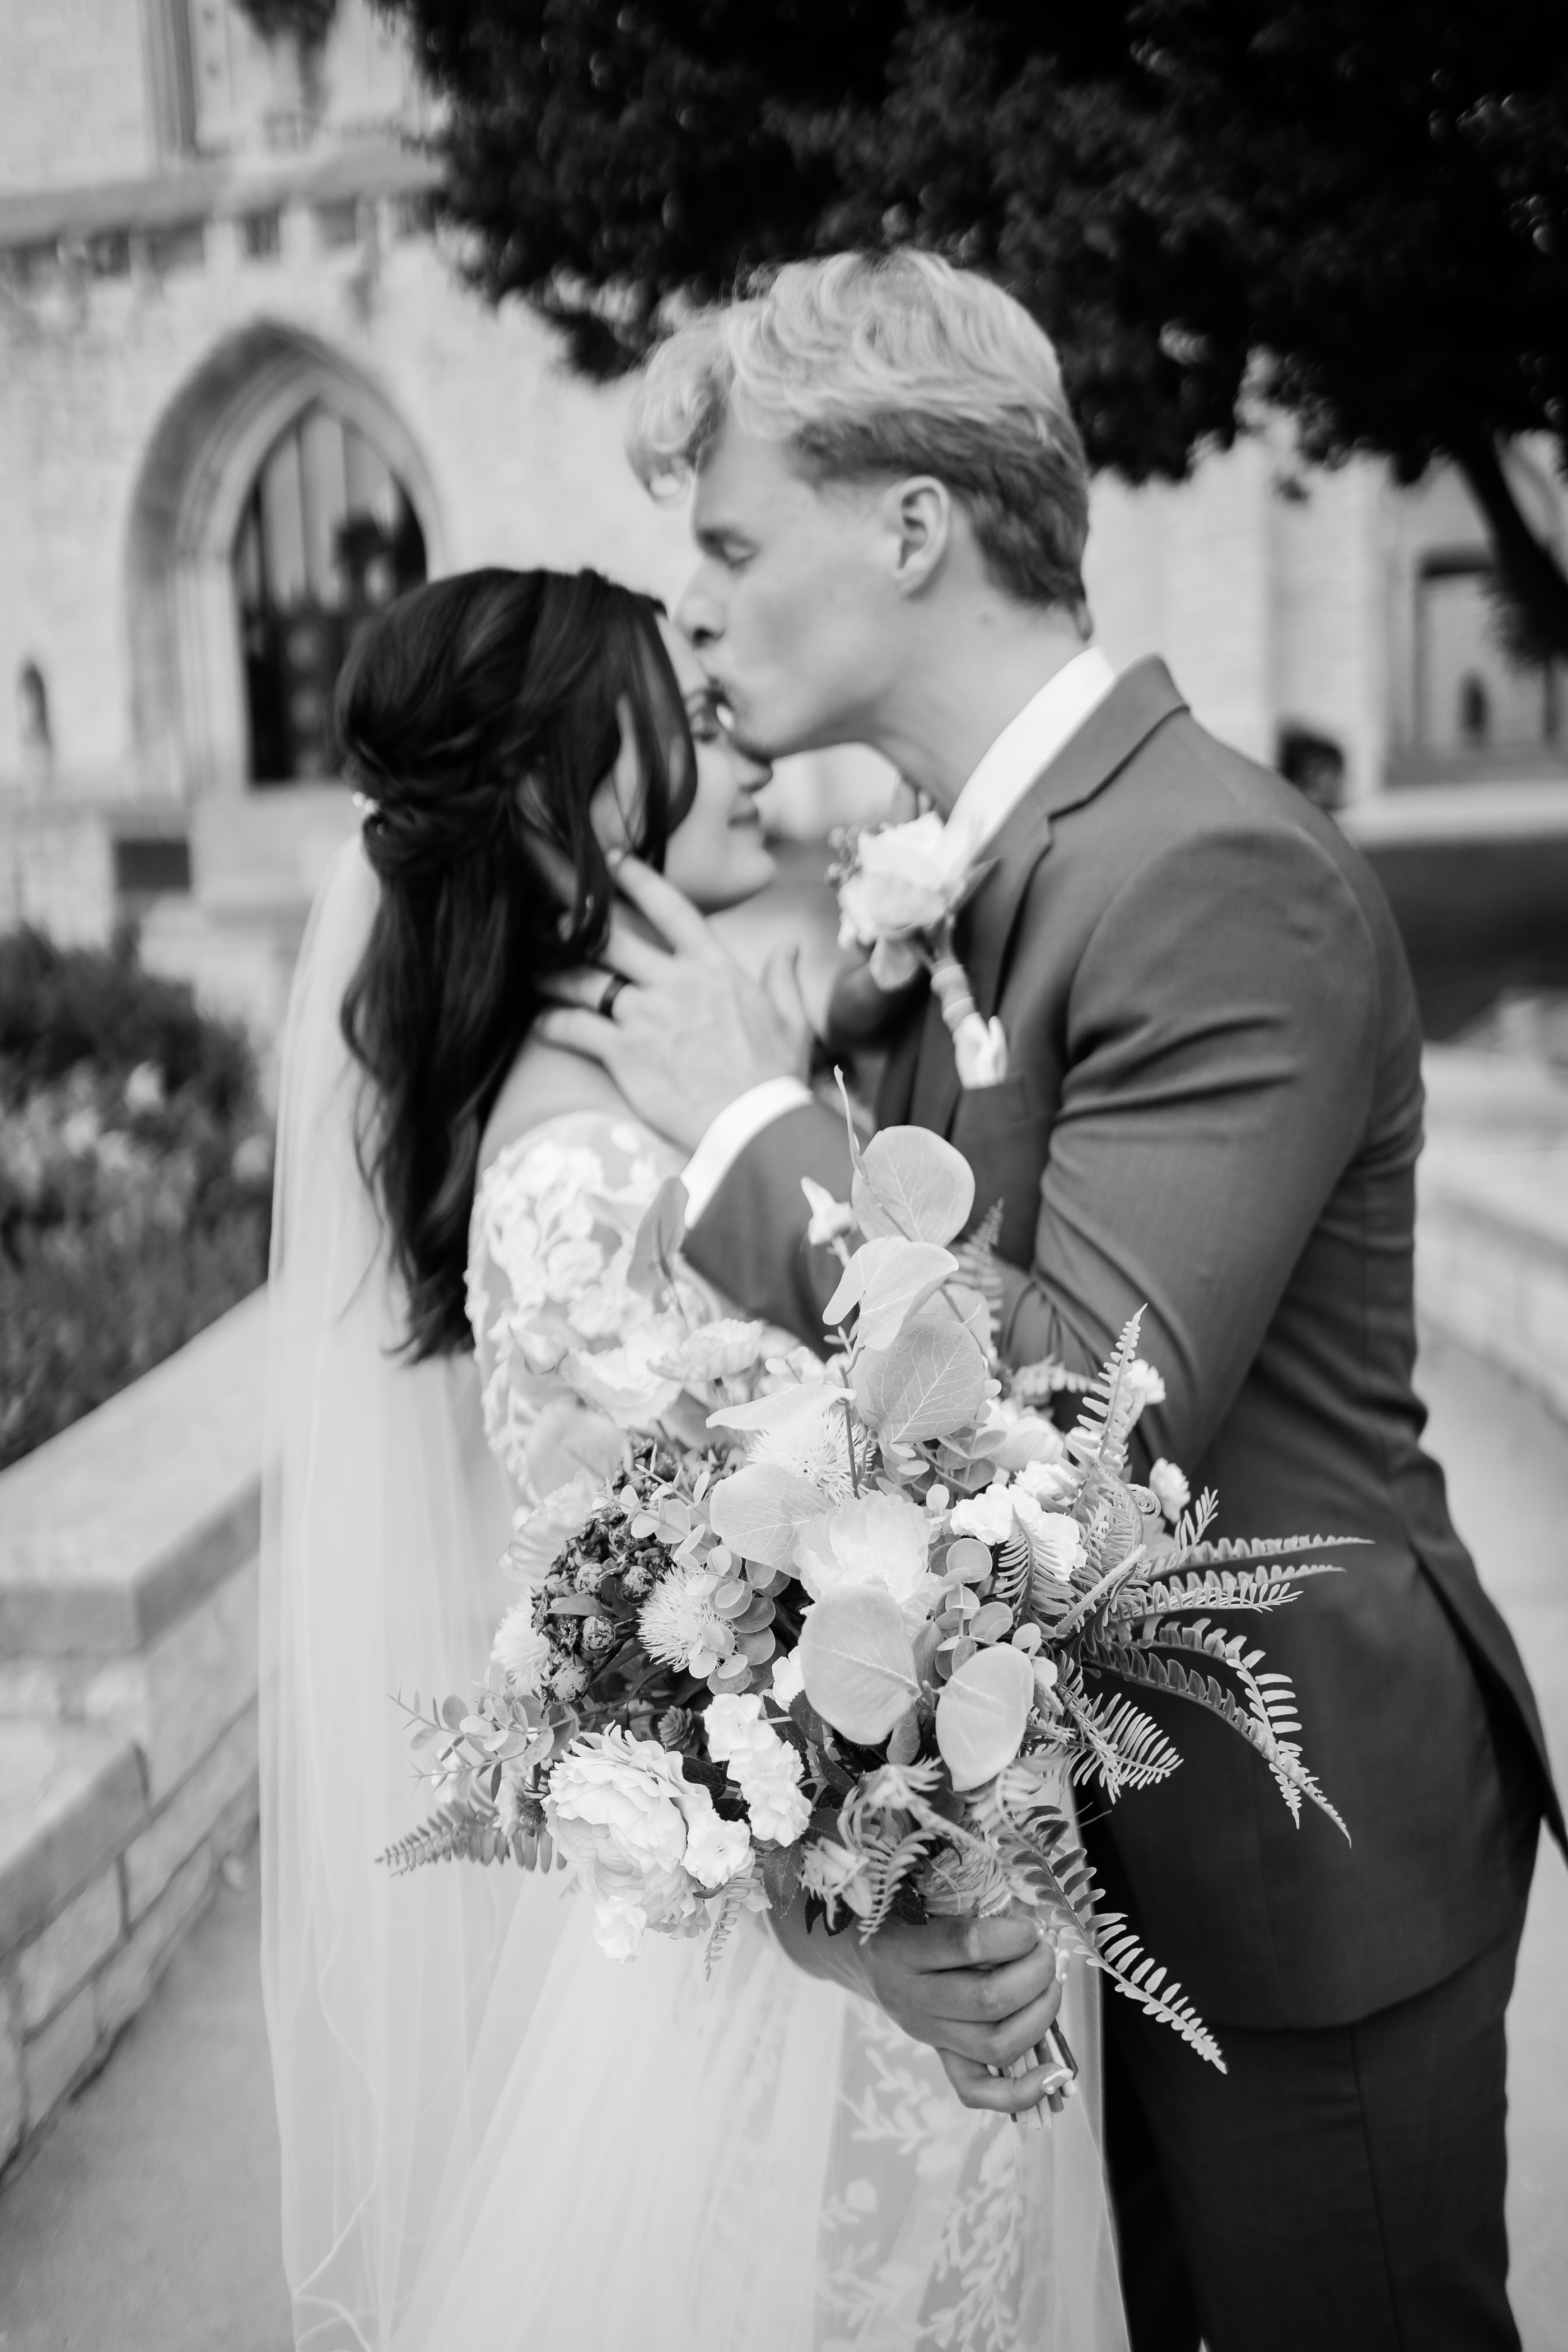 Fort Wayne wedding photographers photograph groom kissing bride on the forehead for their wedding portraits in Fort Wayne wedding venue